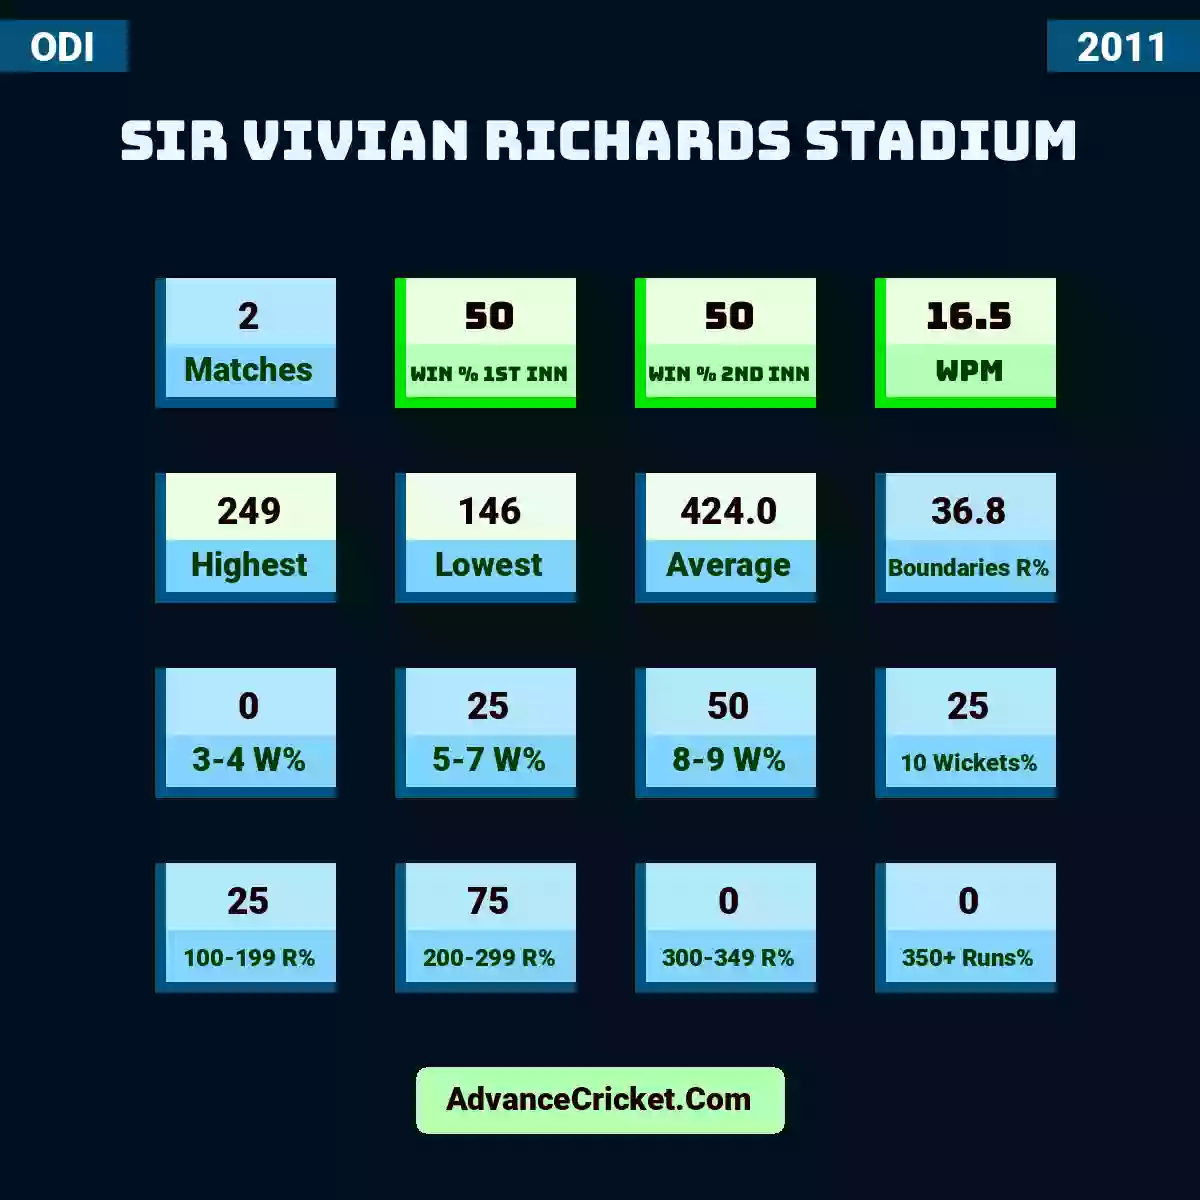 Image showing Sir Vivian Richards Stadium with Matches: 2, Win % 1st Inn: 50, Win % 2nd Inn: 50, WPM: 16.5, Highest: 249, Lowest: 146, Average: 424.0, Boundaries R%: 36.8, 3-4 W%: 0, 5-7 W%: 25, 8-9 W%: 50, 10 Wickets%: 25, 100-199 R%: 25, 200-299 R%: 75, 300-349 R%: 0, 350+ Runs%: 0.